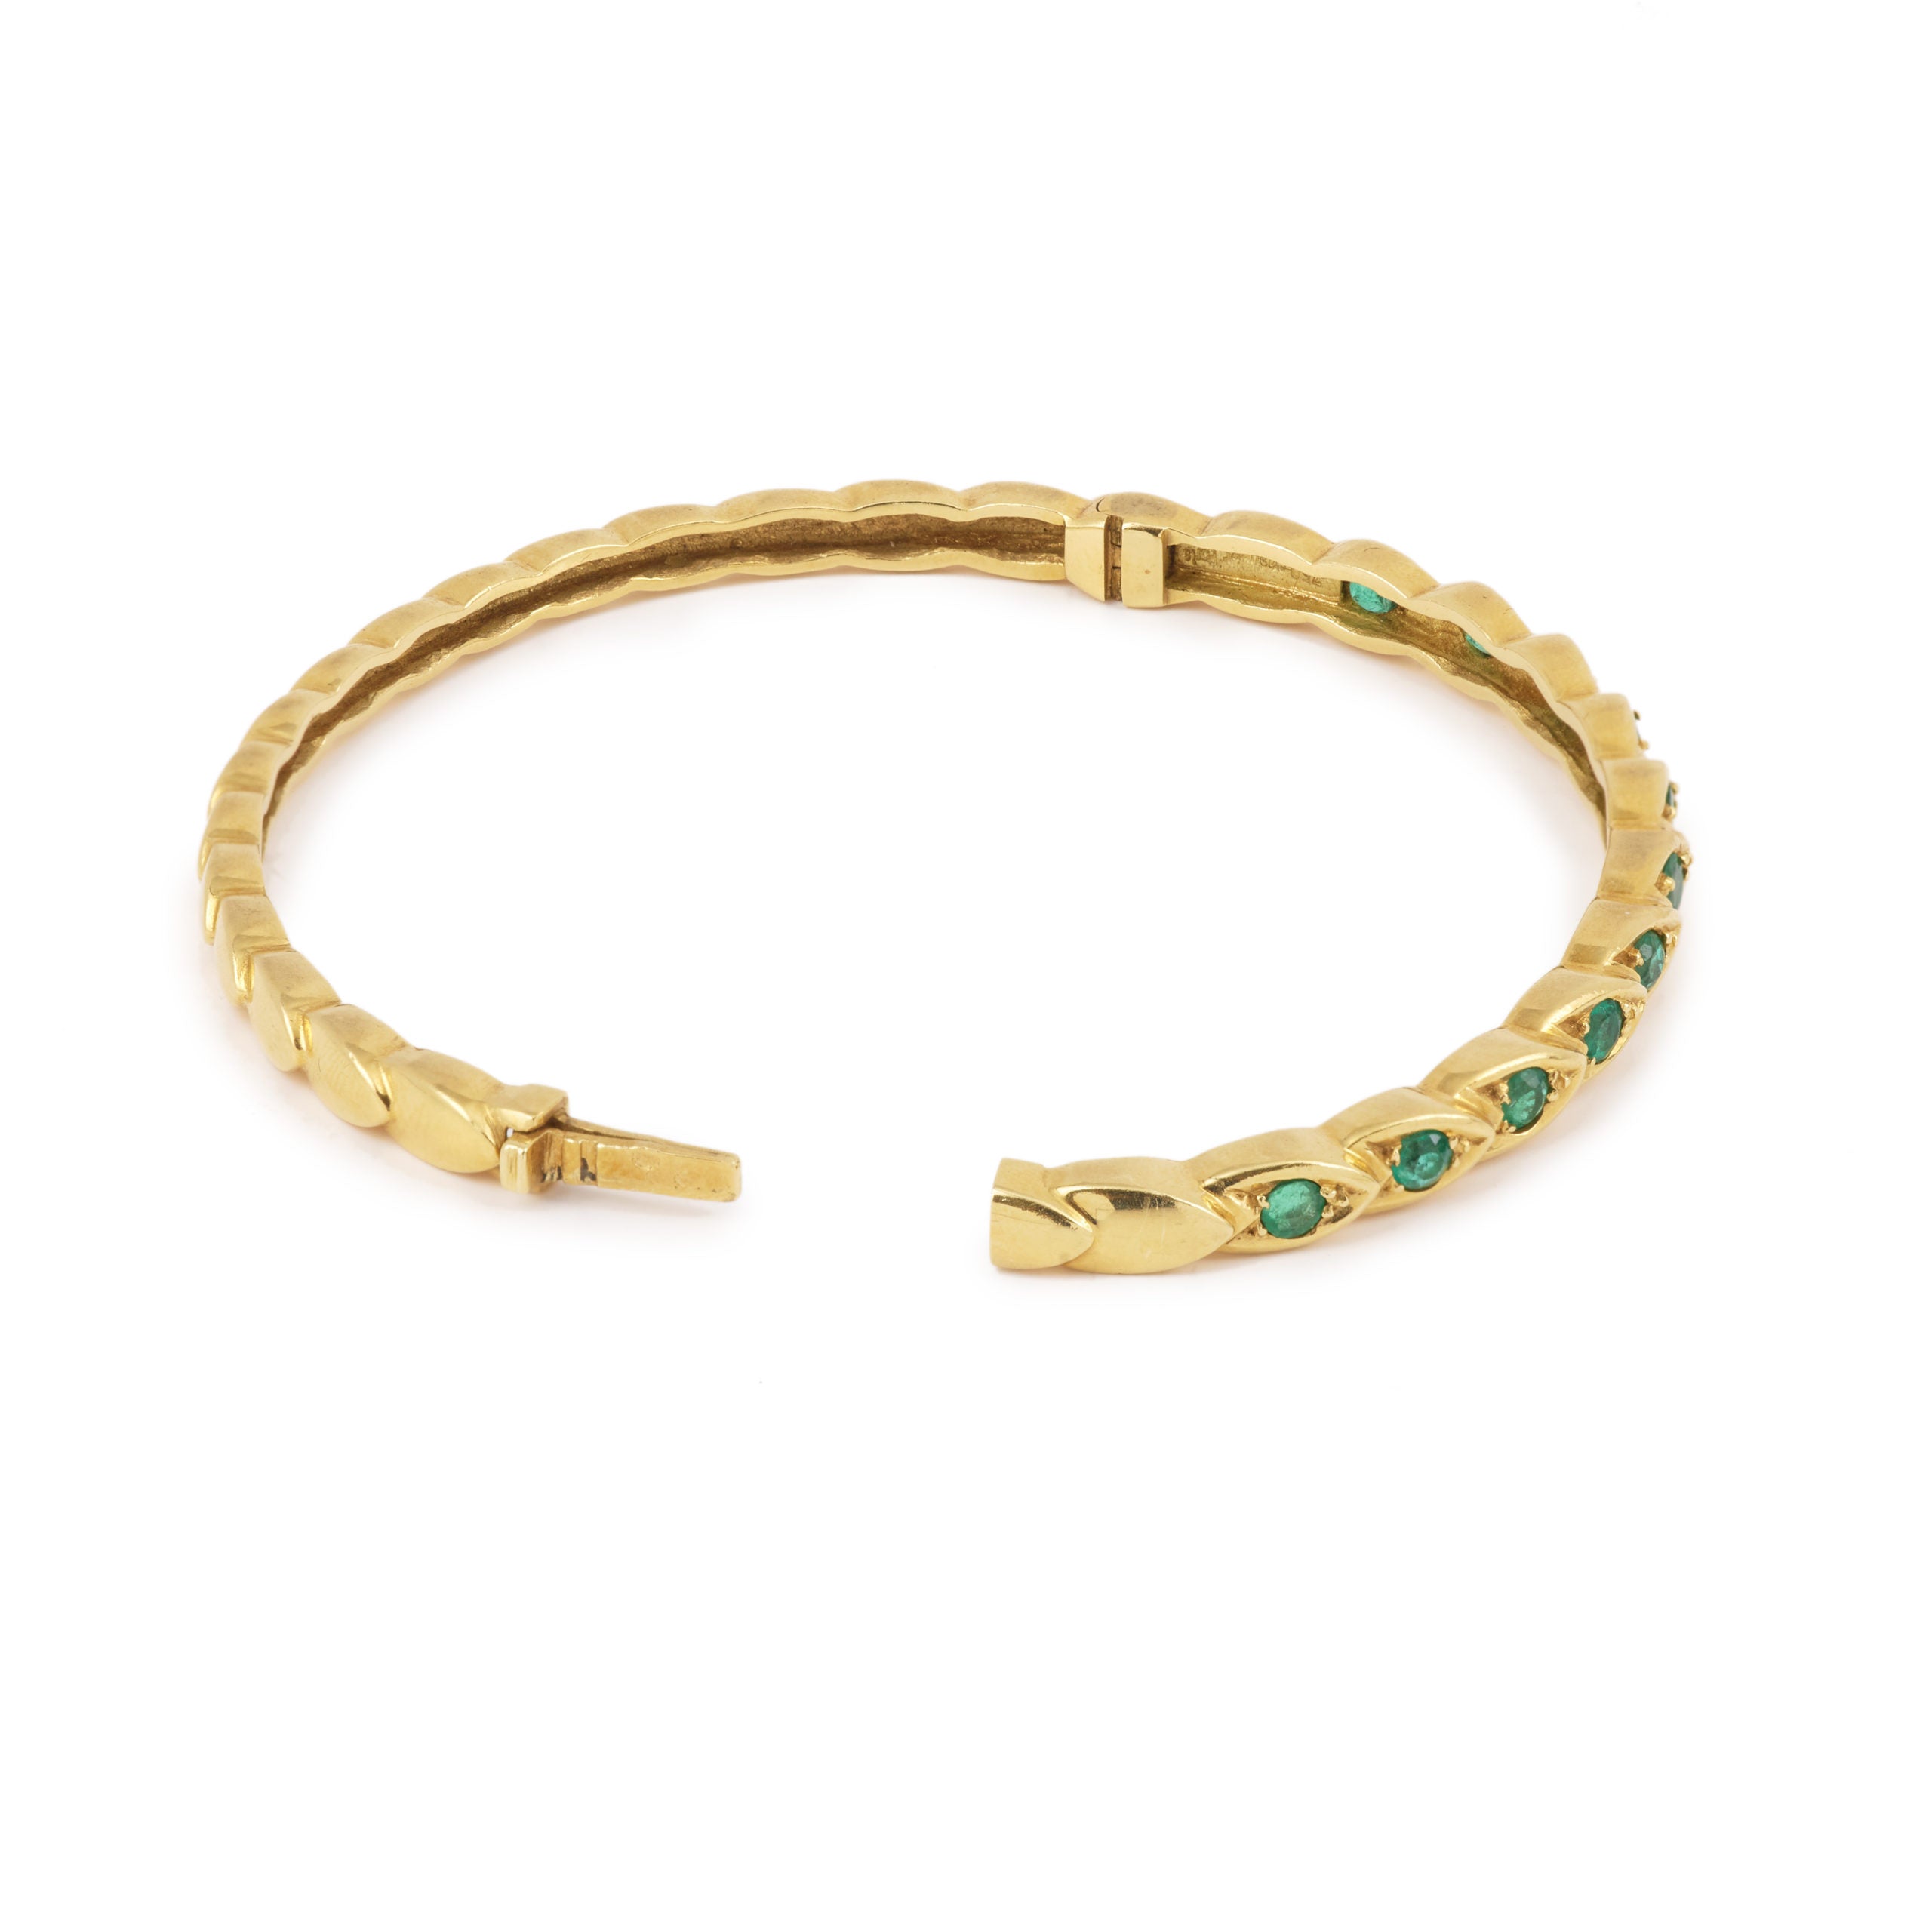 Chaumet 11 Emeralds 18 Carat Yellow Gold Bracelet